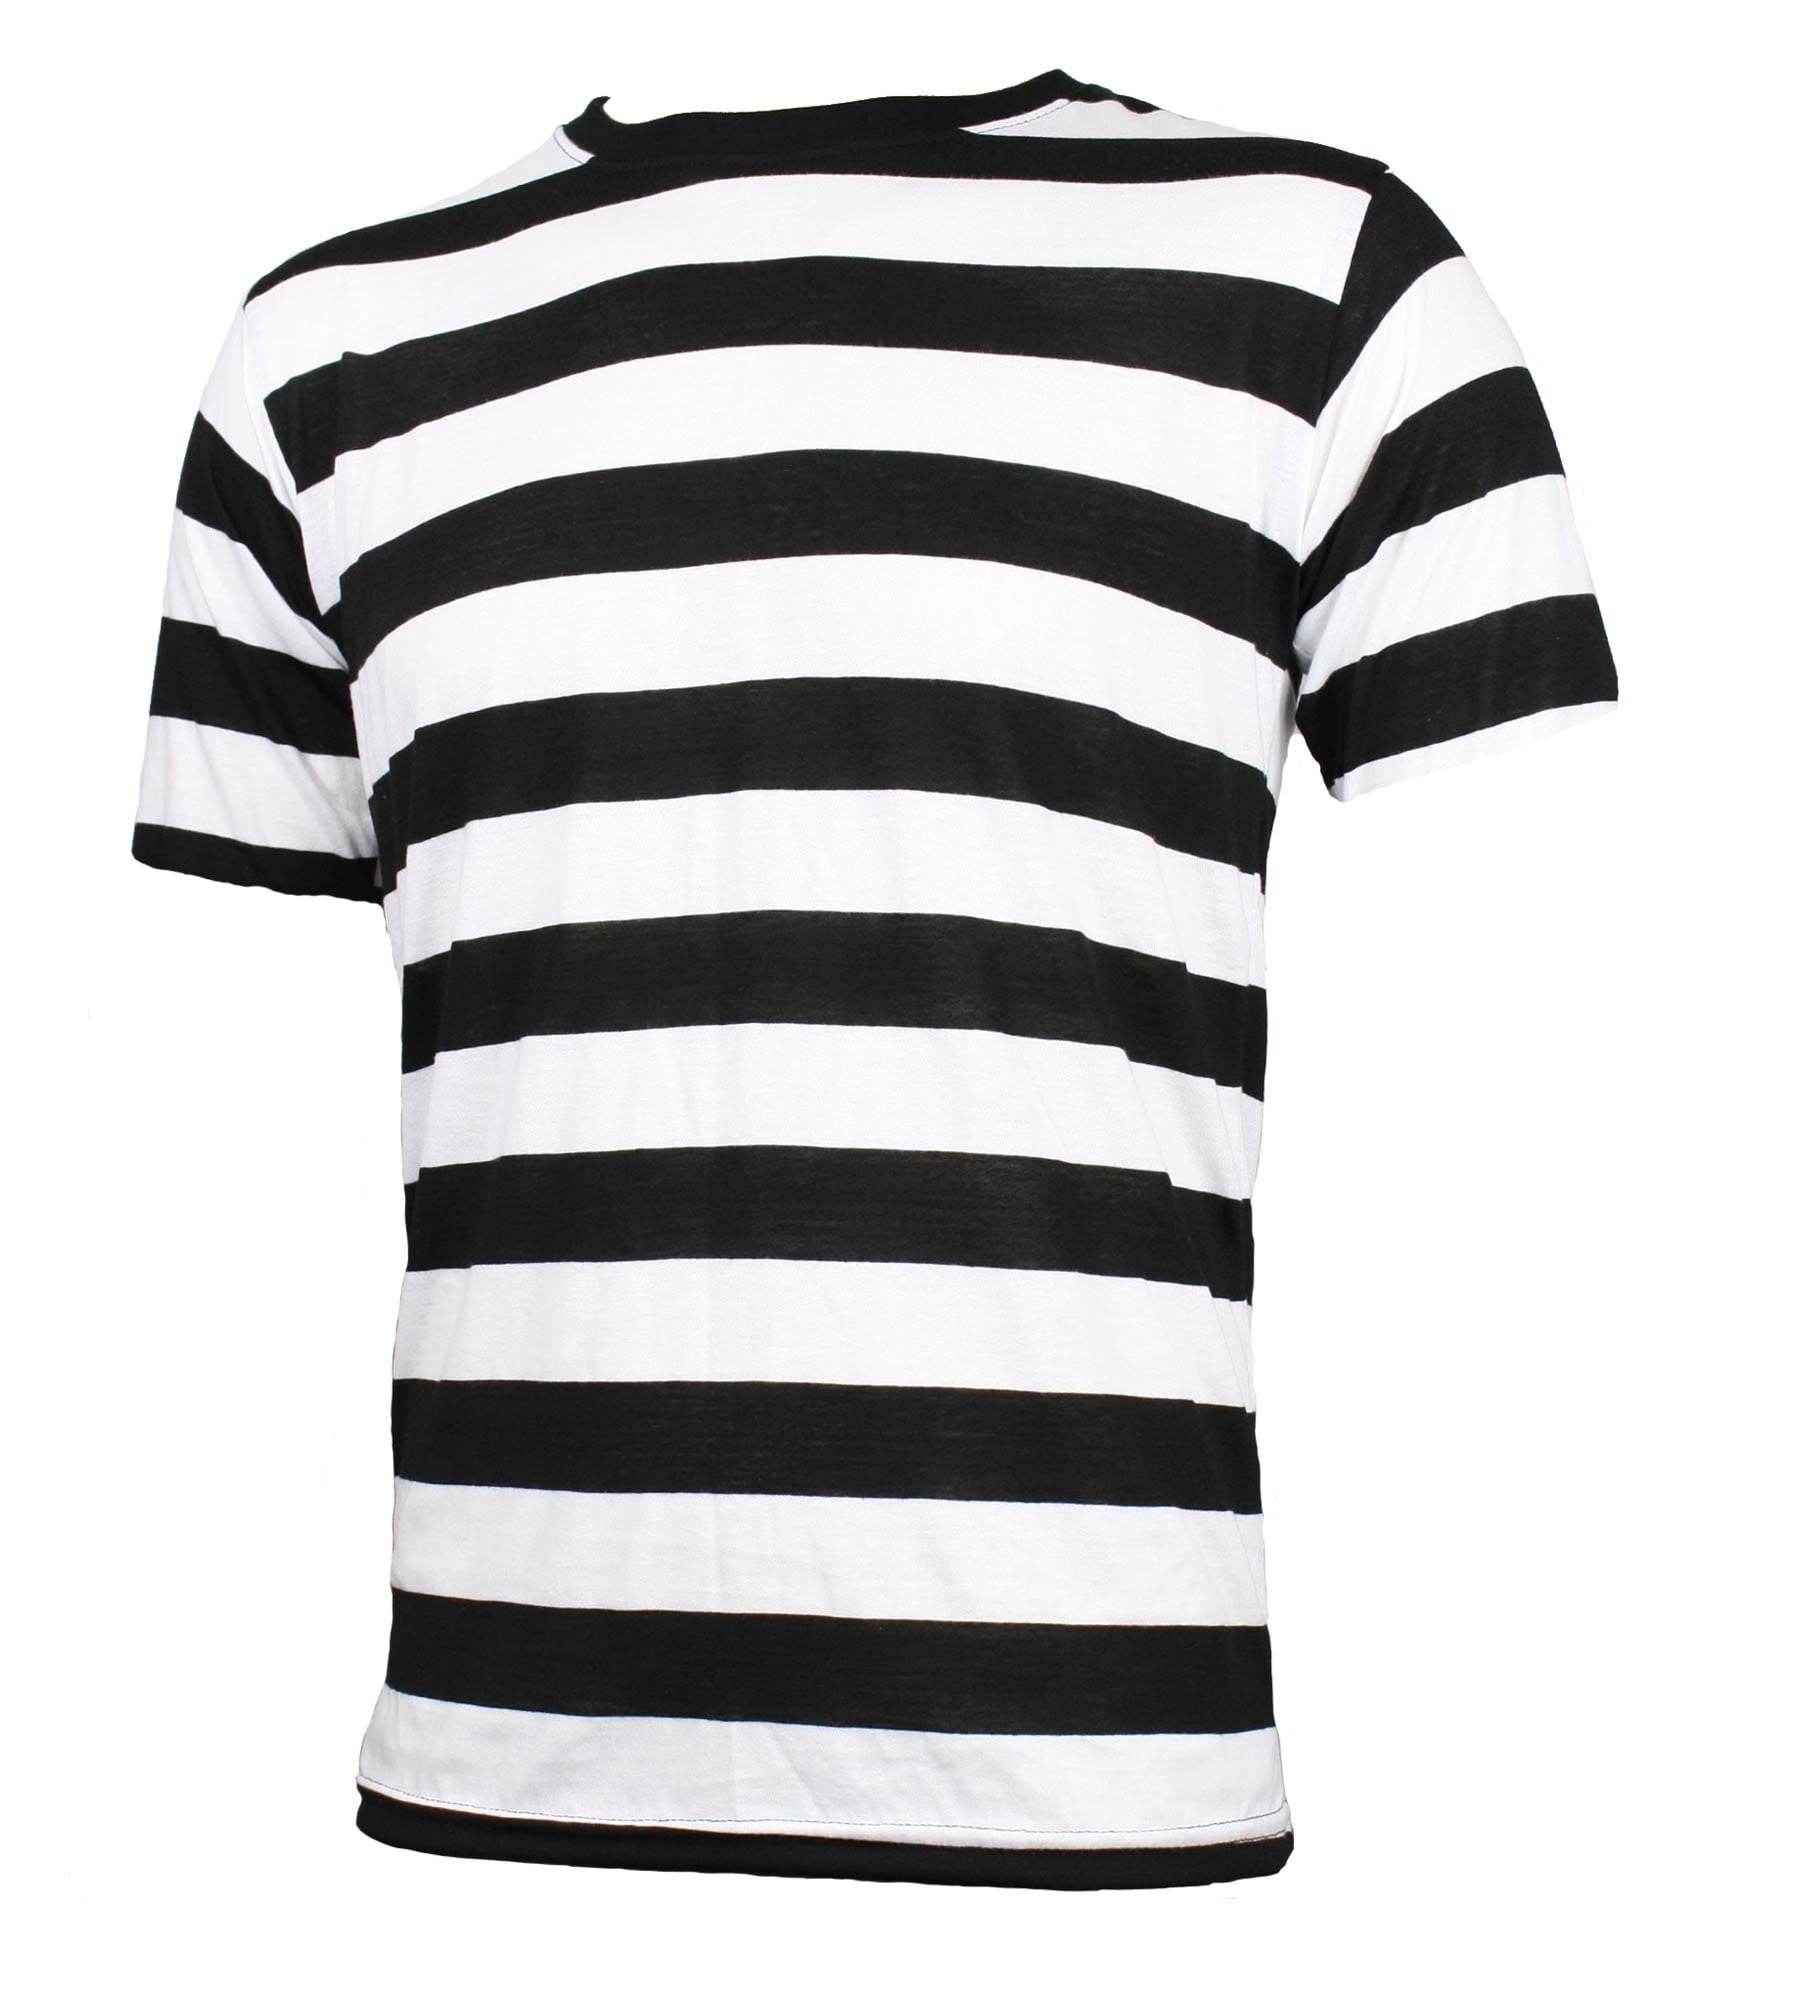 Sleeve Striped Shirt XL - Walmart.com